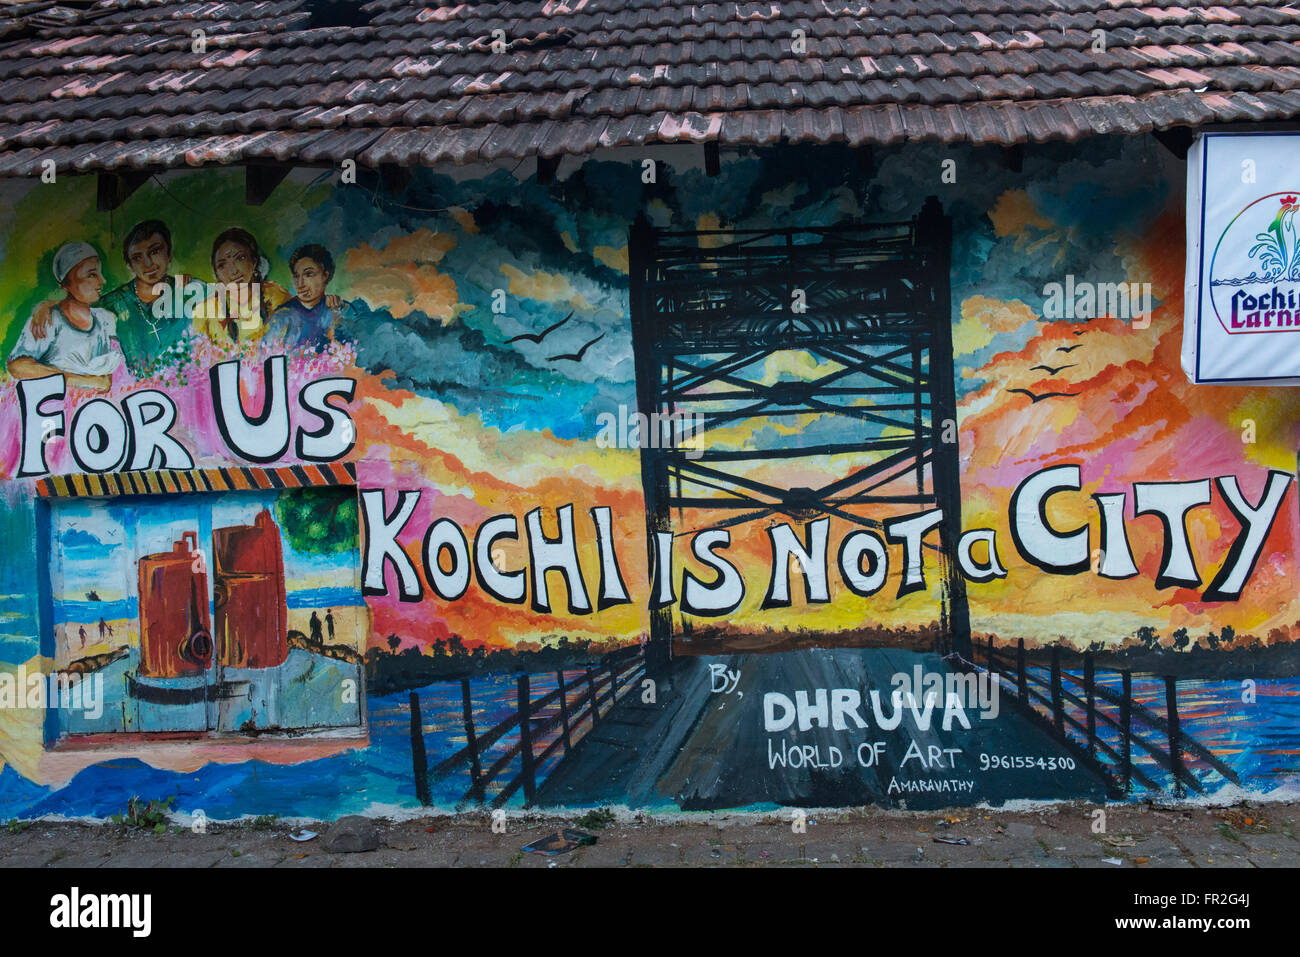 Street Art, Kochi - Cochin Stock Photo